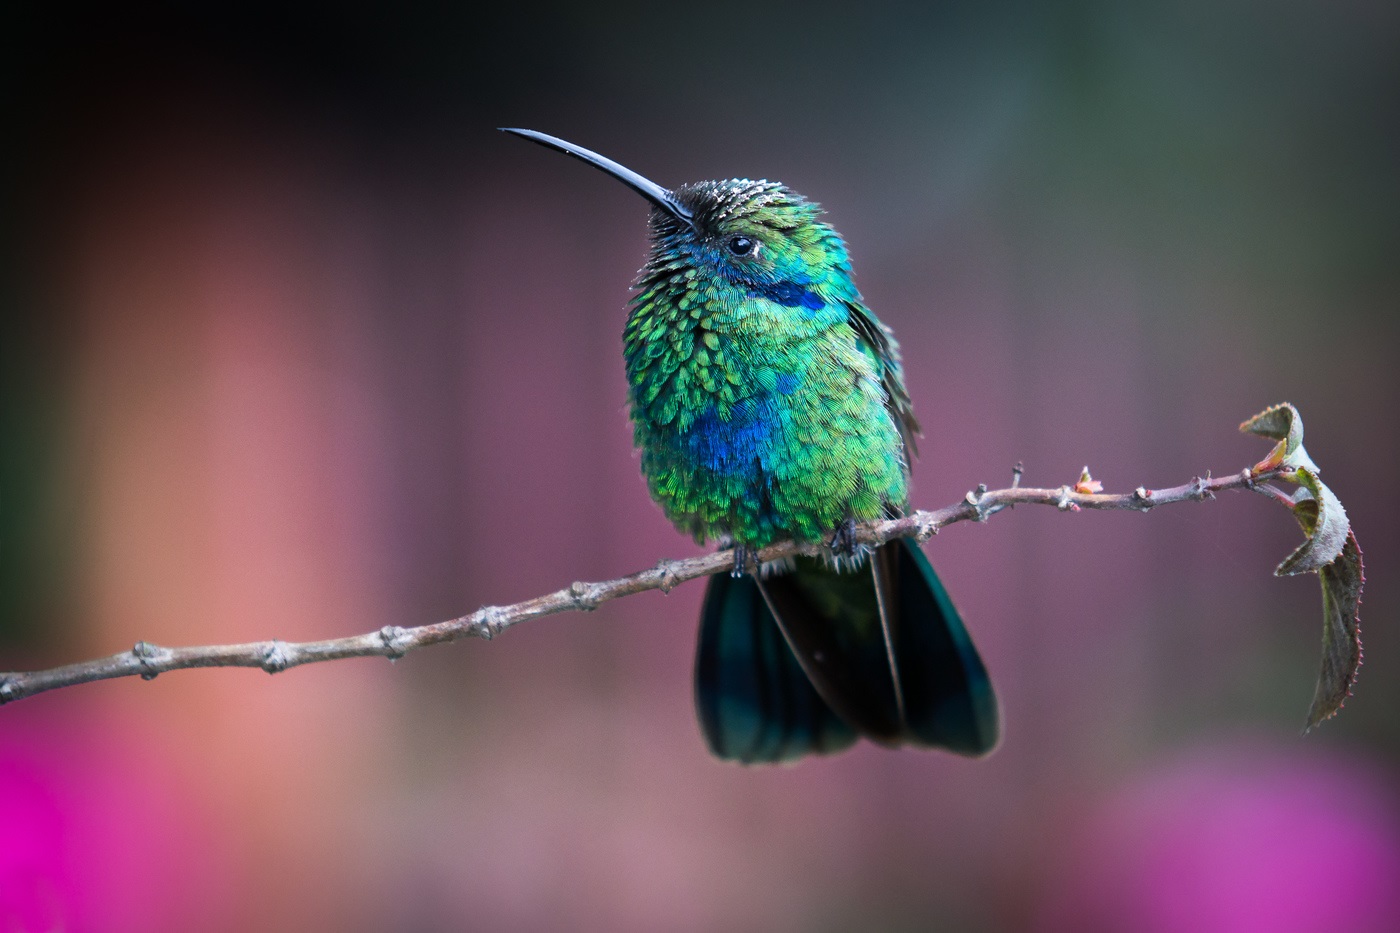 Ande colombiane: una foto di un colibrì su un ramo